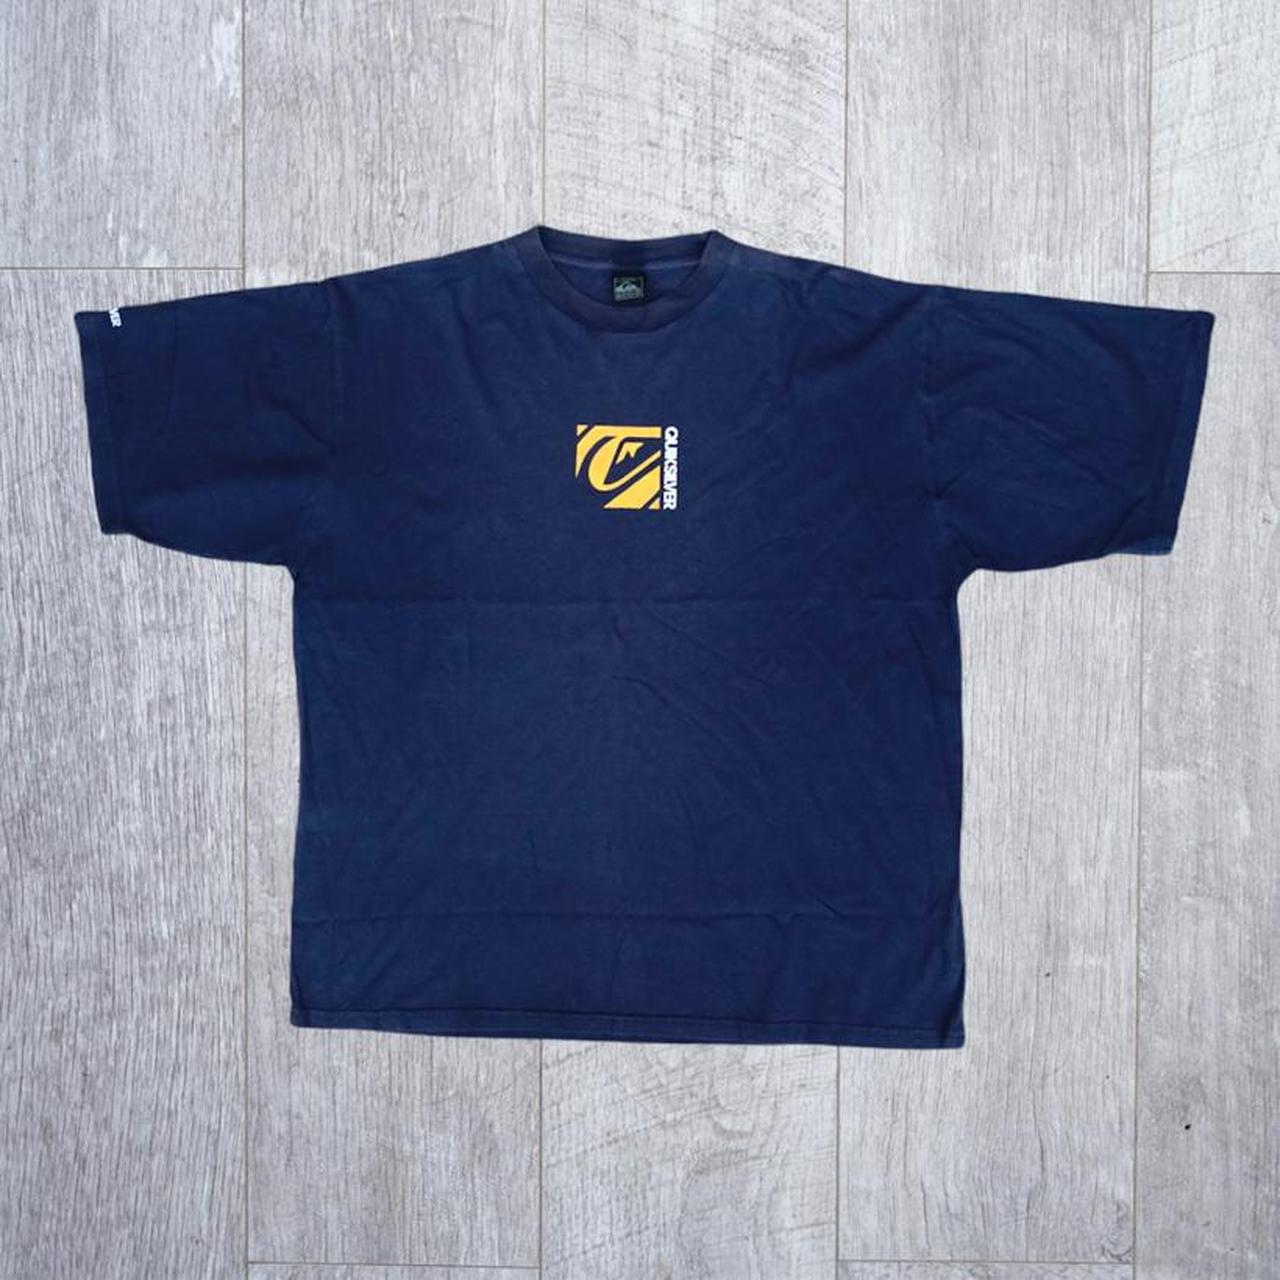 Quiksilver Men's Navy and Yellow T-shirt